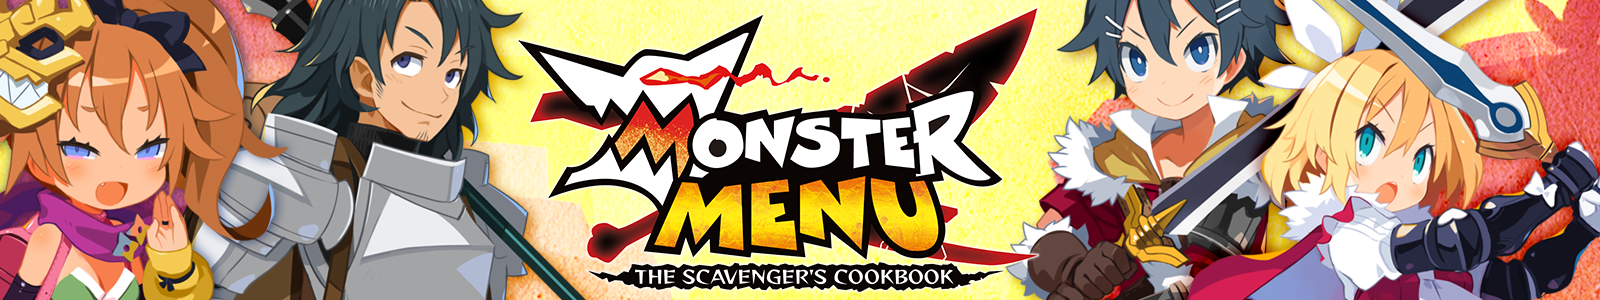 Monster Menu: The Scavenger's Cookbook lanza demo 1